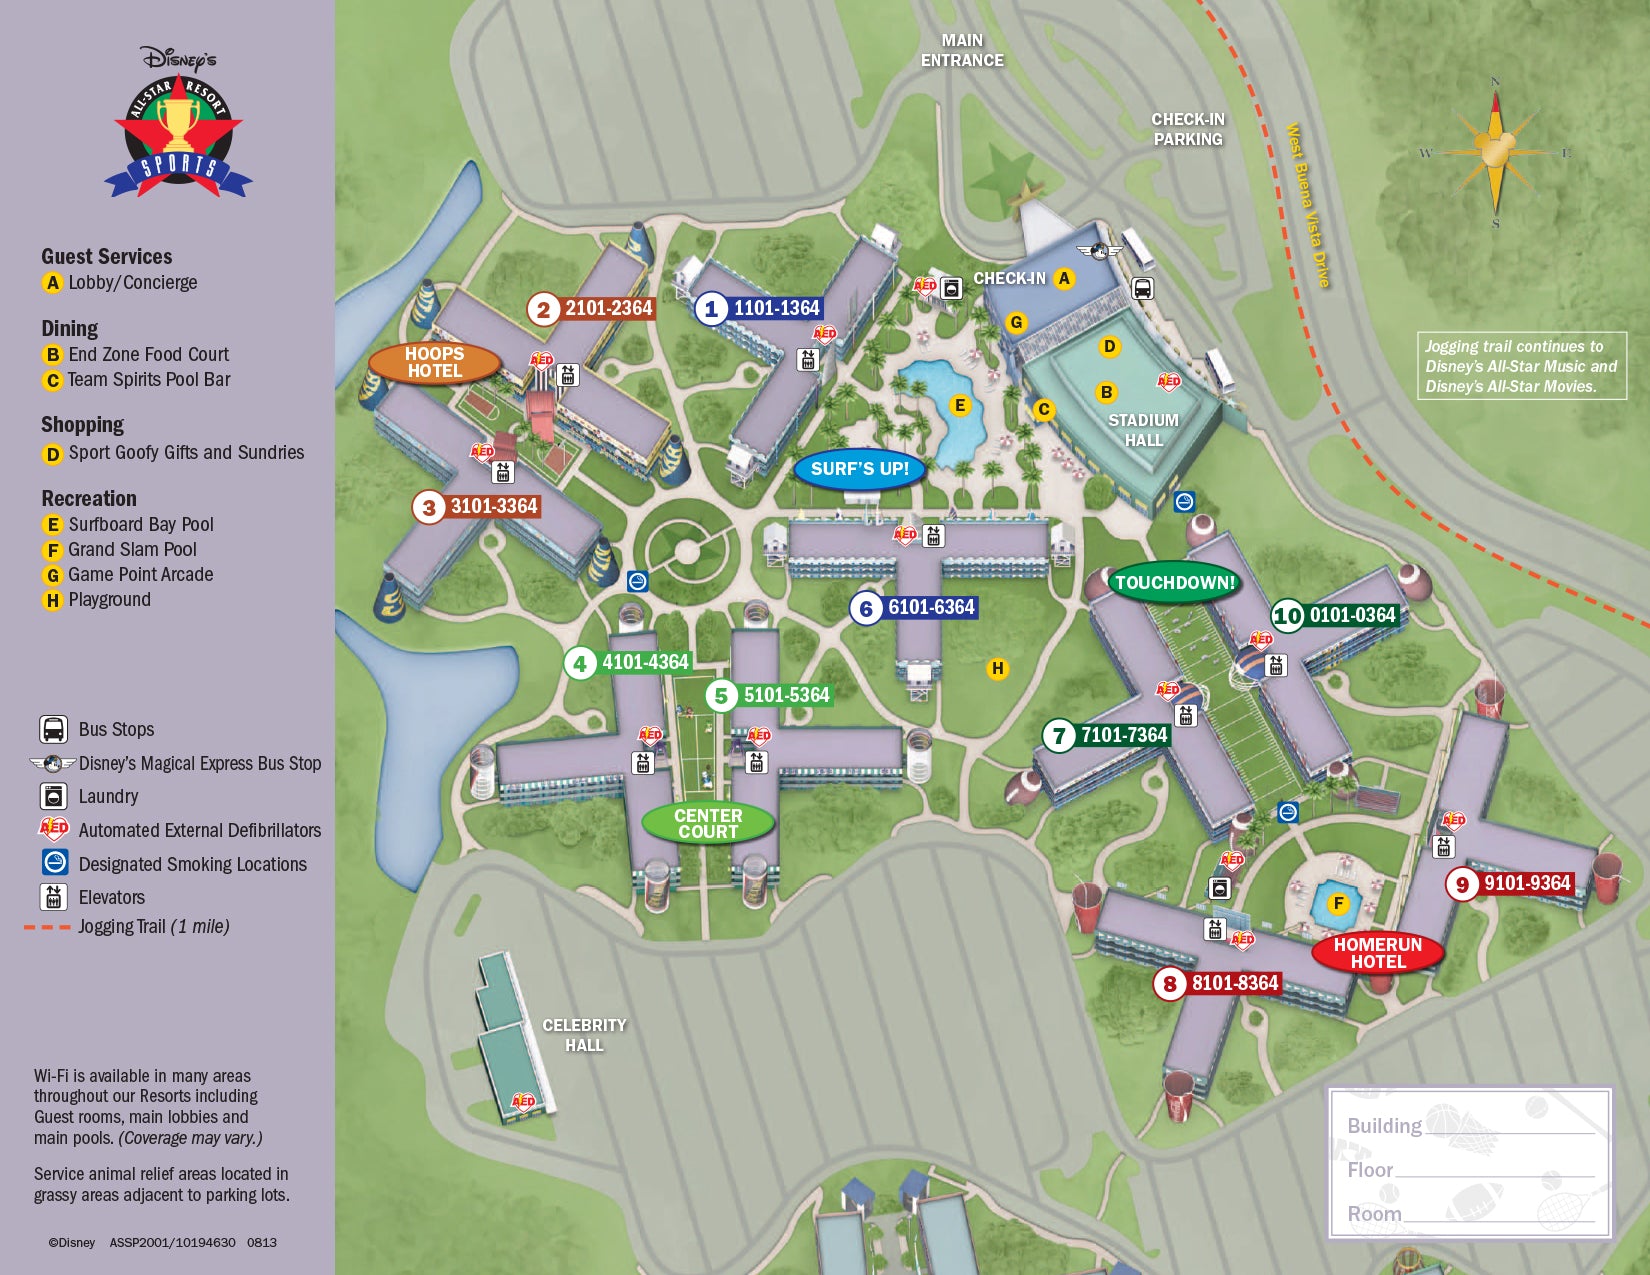 Is an area located. Диснейленд в Москве карта парка. Карта NB. Disney's all-Star Music Resort. Где находится Диснейленд в каком городе и стране карта.